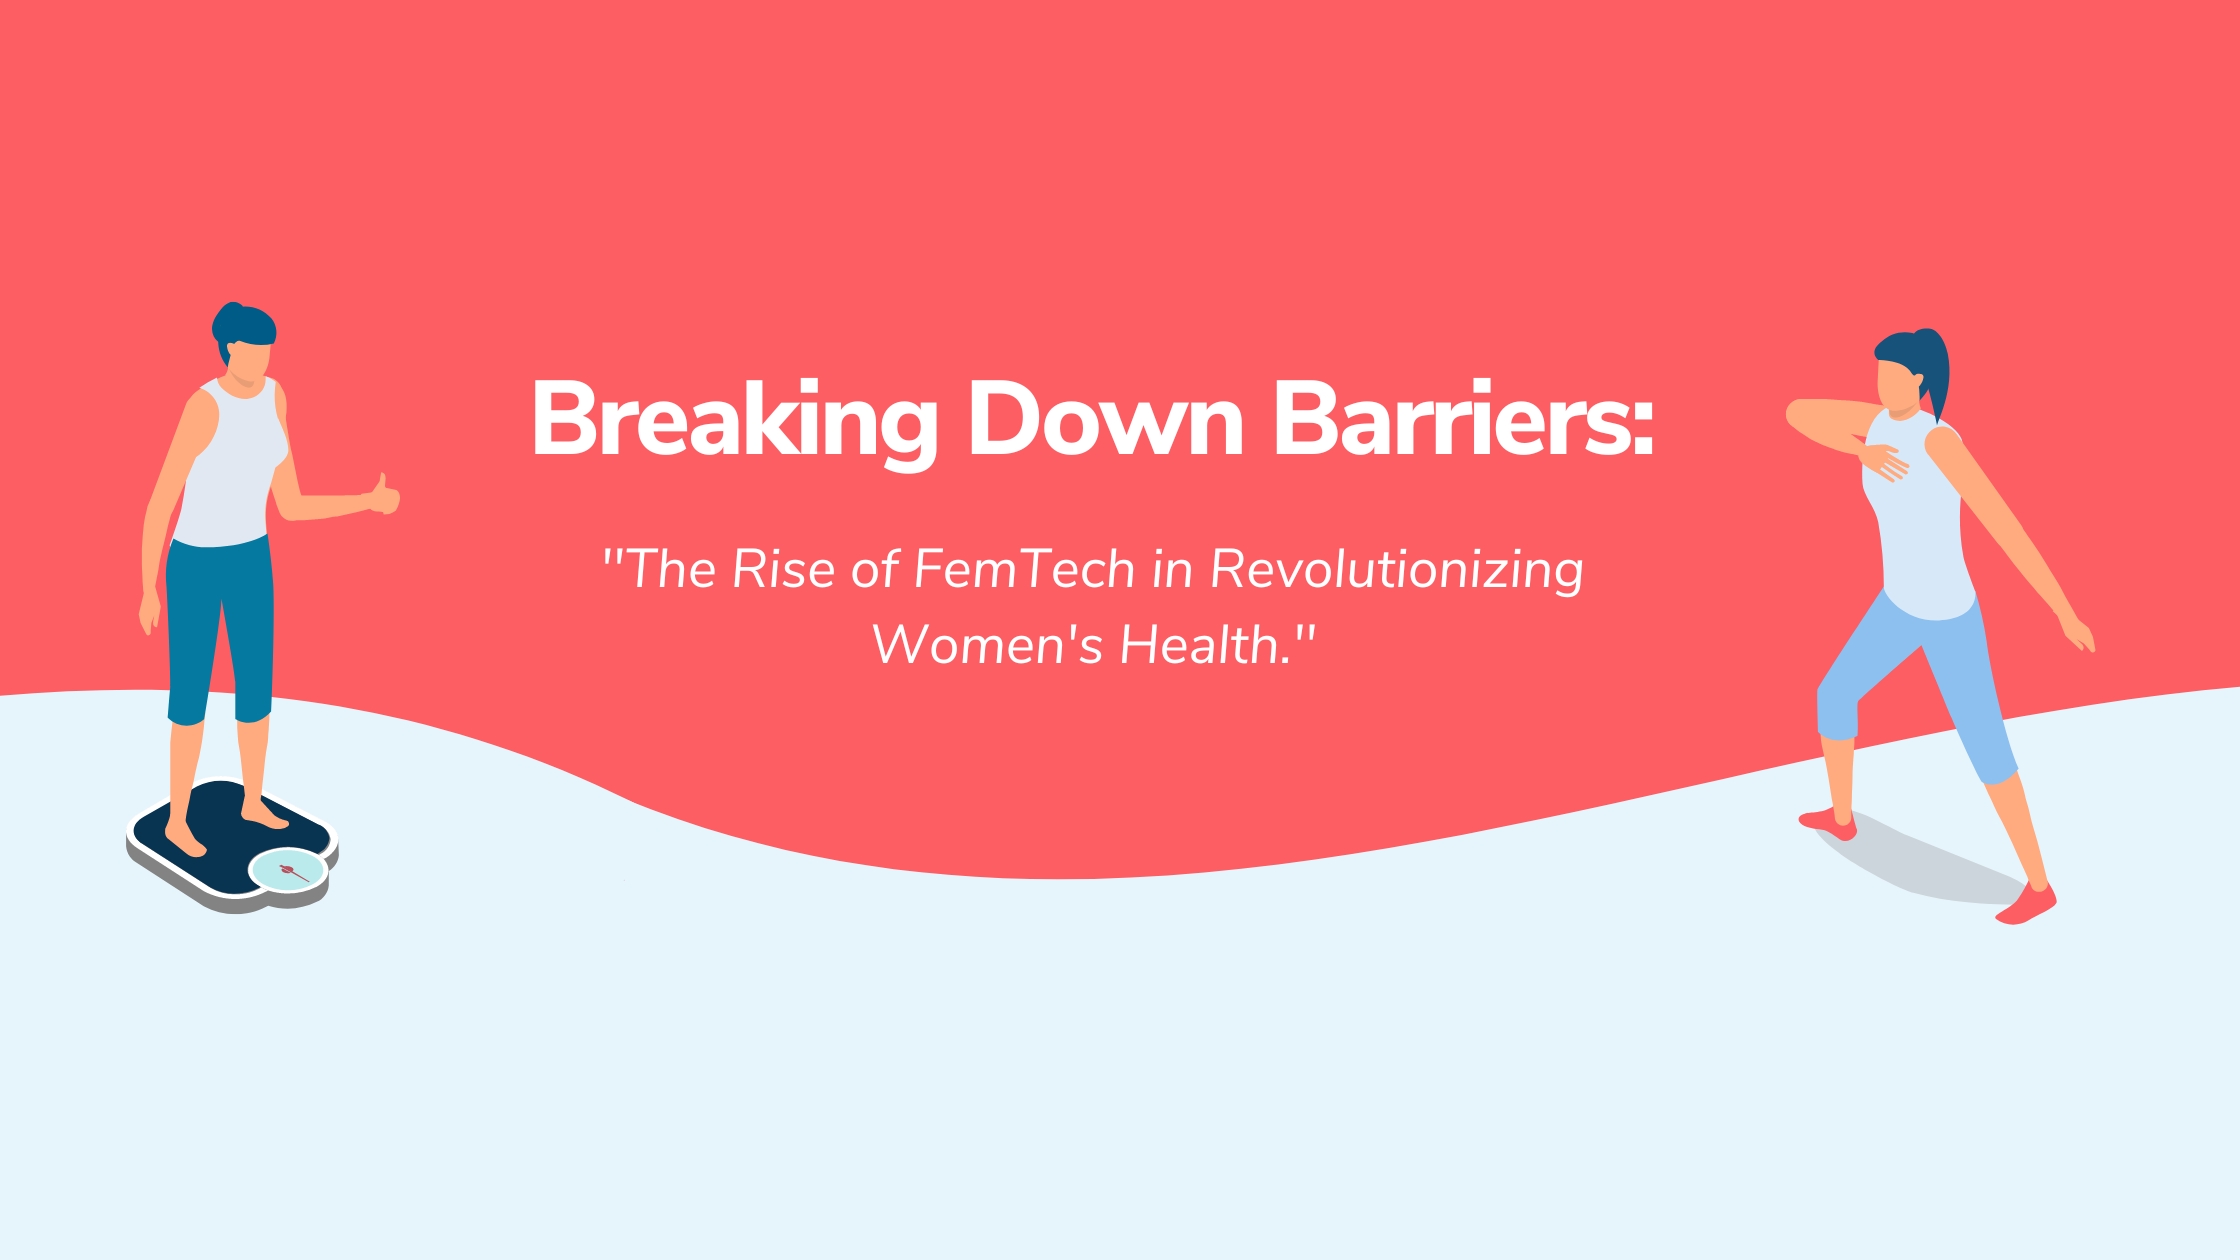 Breaking Down Barriers: The Rise of FemTech in Revolutionizing Women's Health